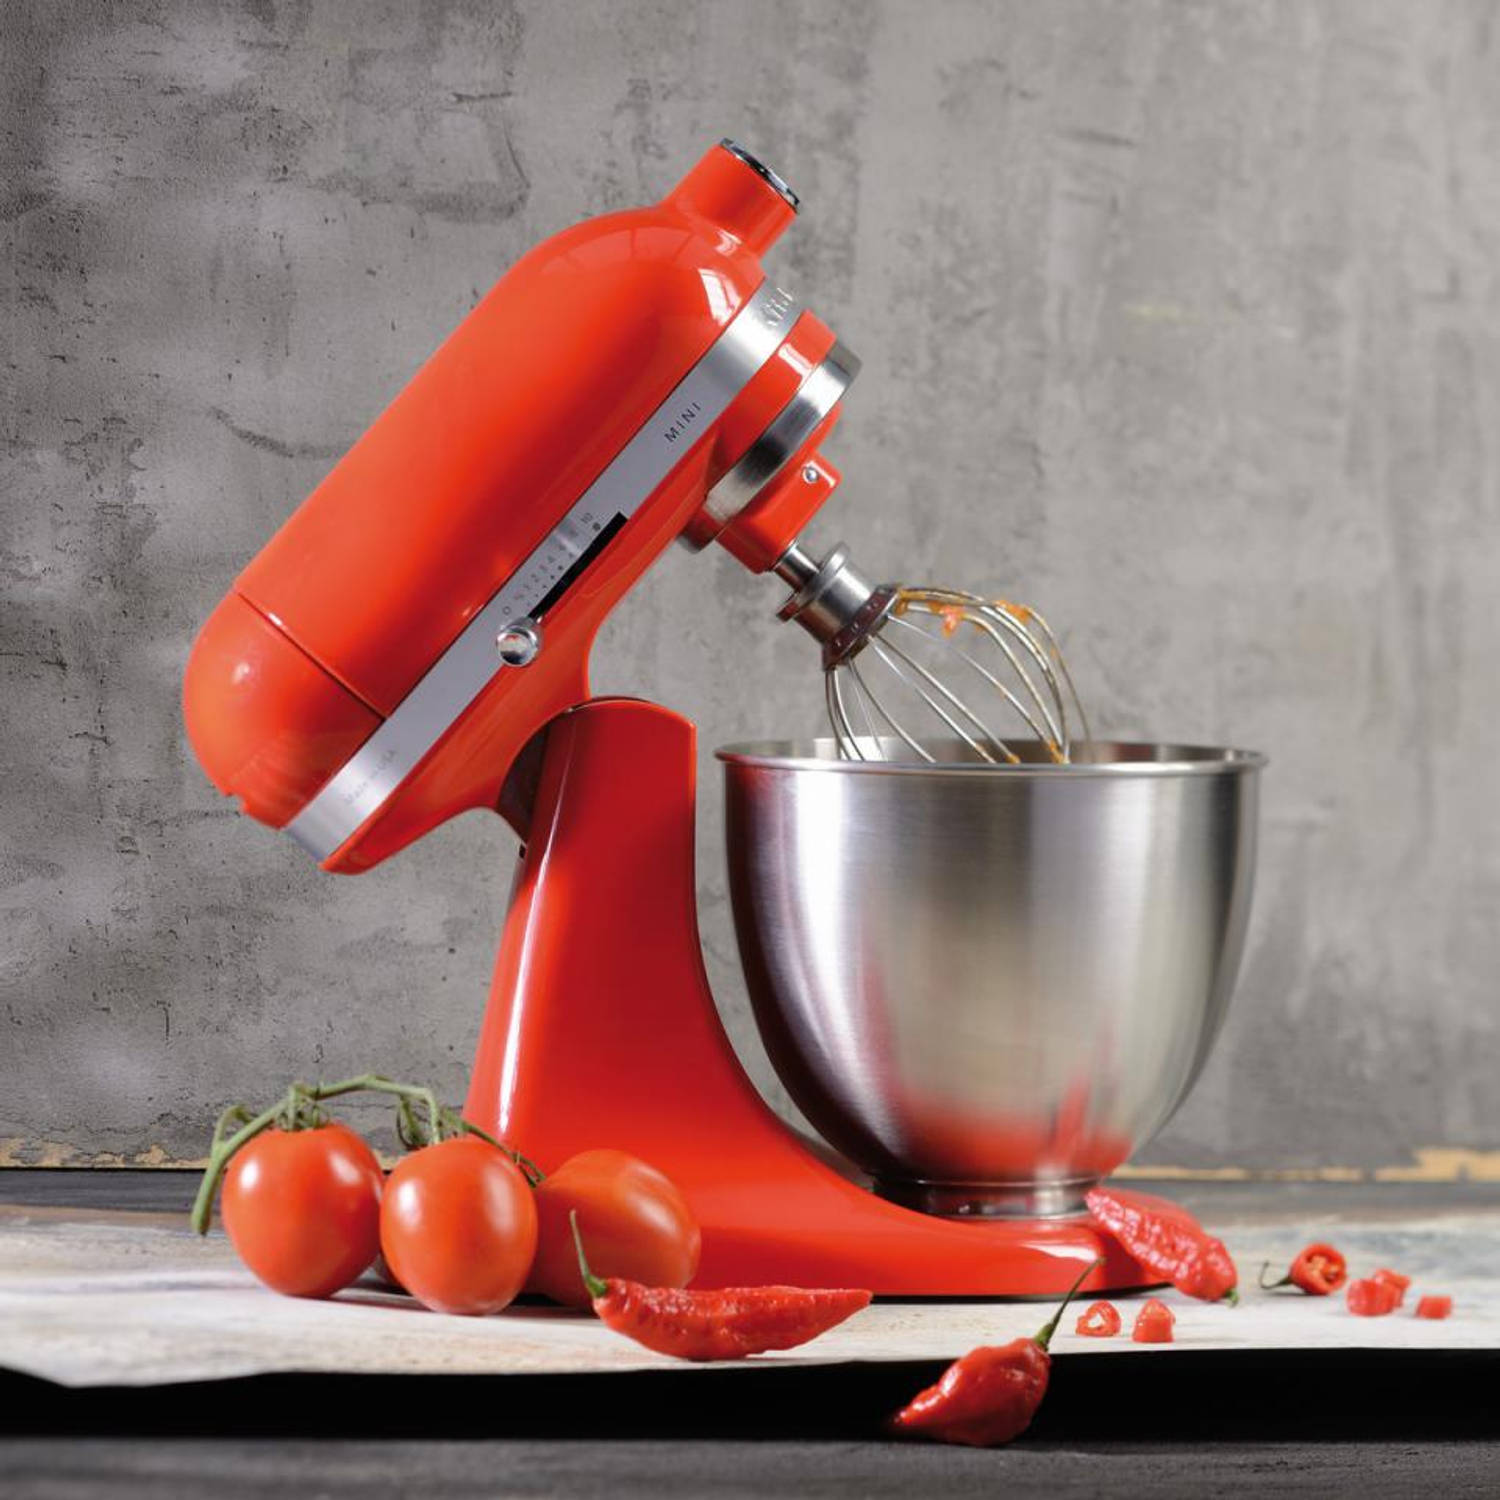 KitchenAid Artisan keukenmixer 5KSM3311 - rood | Blokker